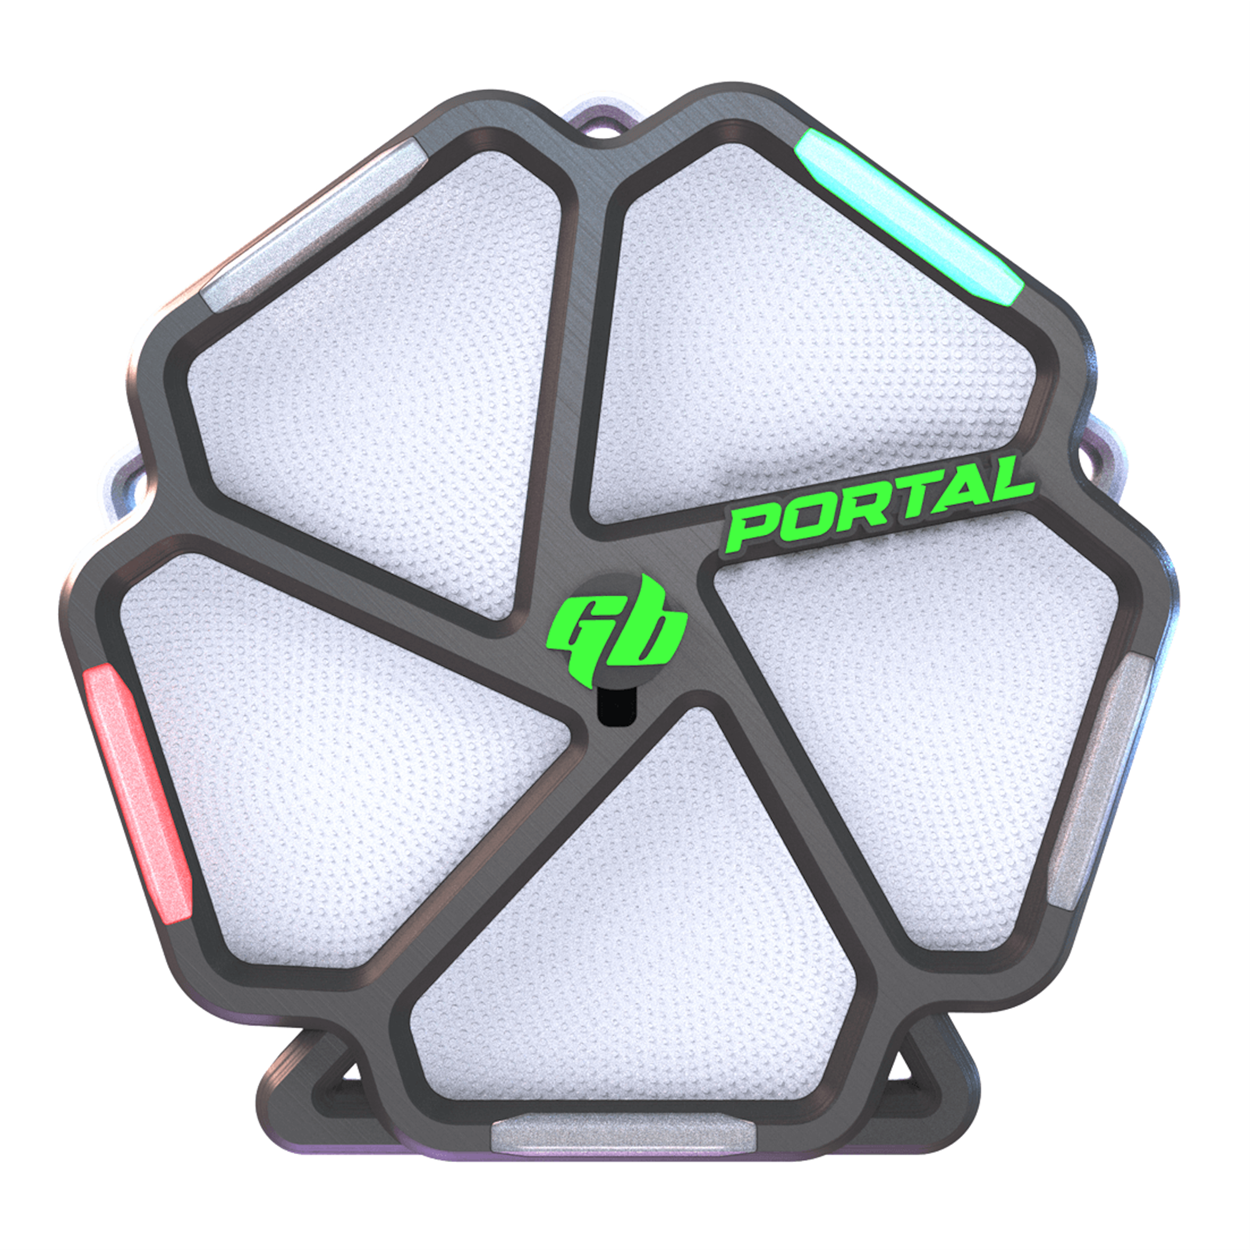 Portal Smart Target Gel Blaster játékfegyver tartozékok